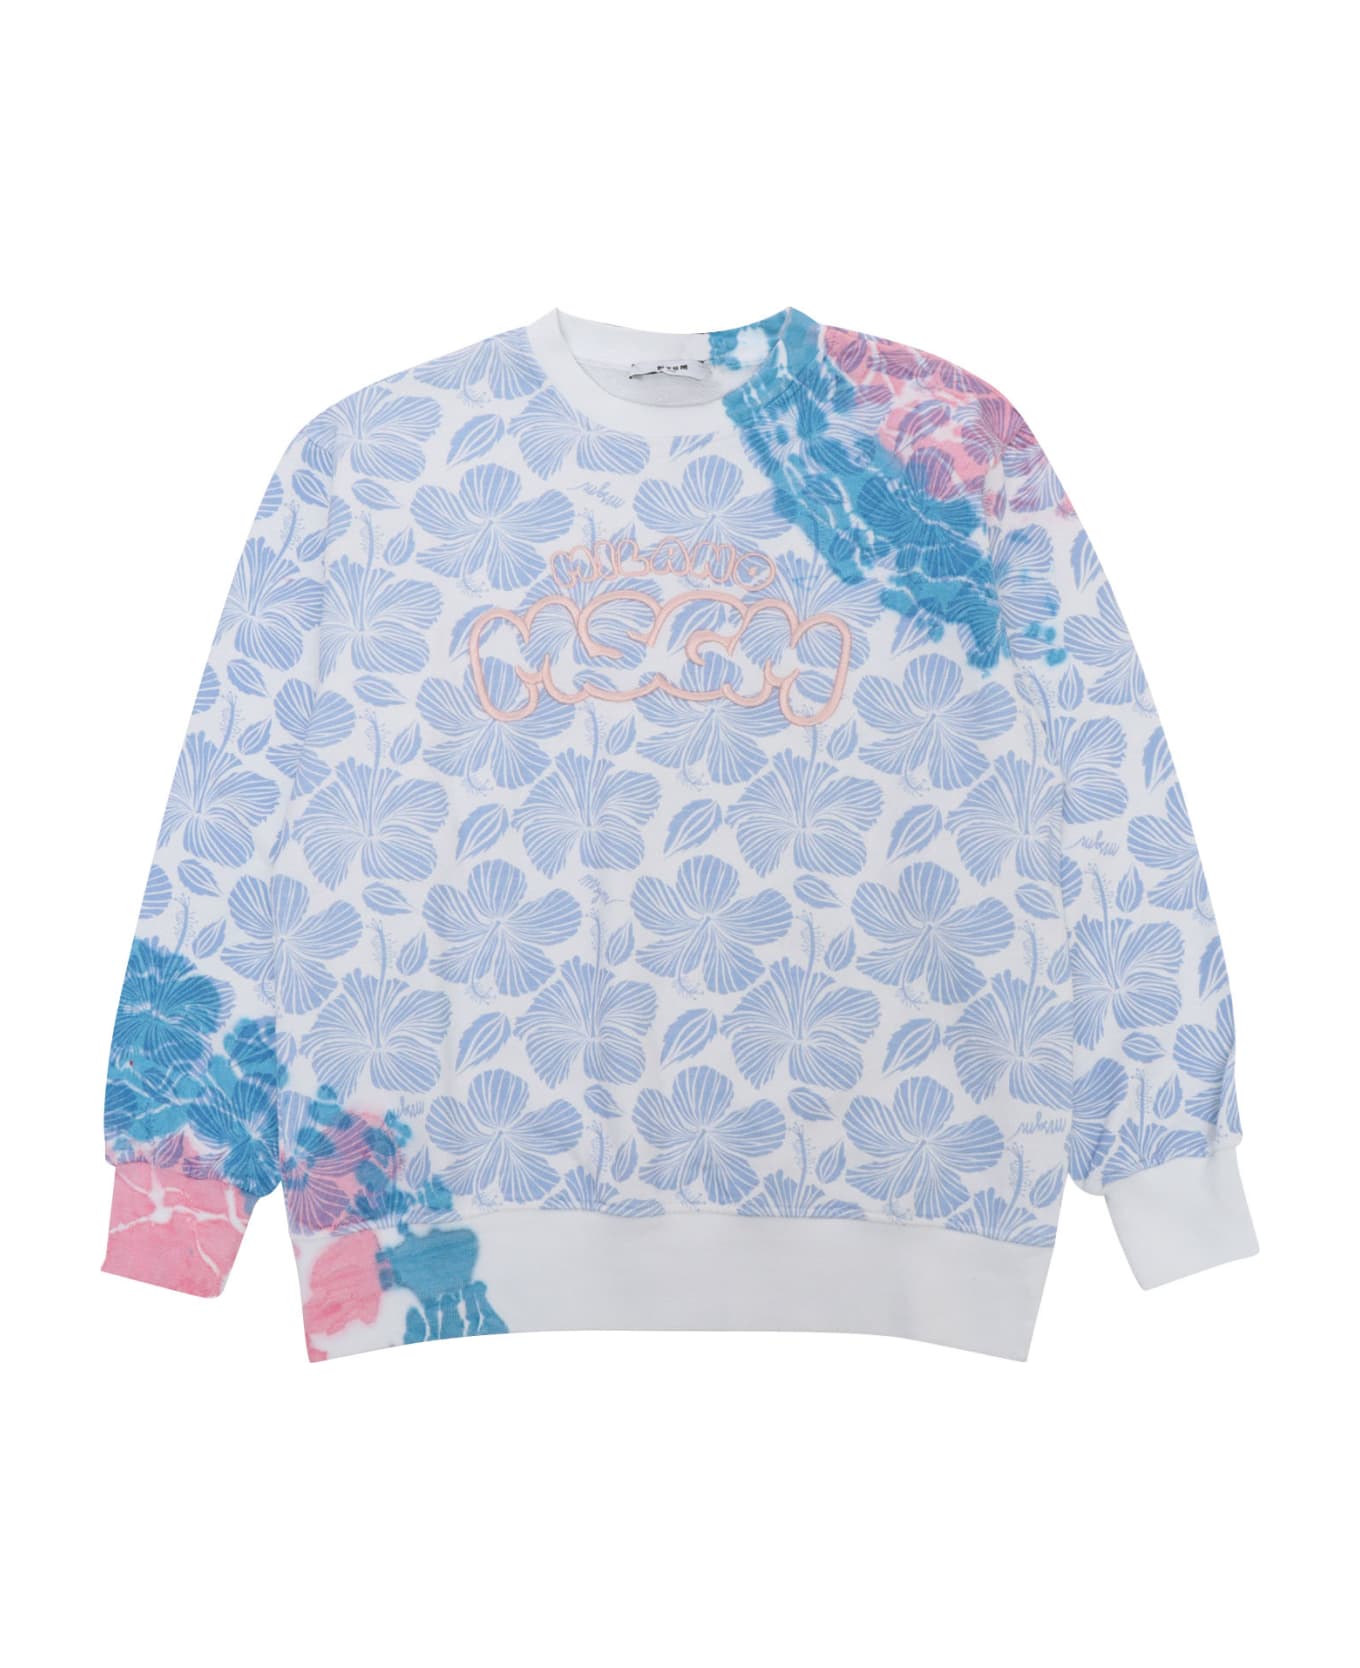 MSGM Sweatshirt With Flower Print - BLUE